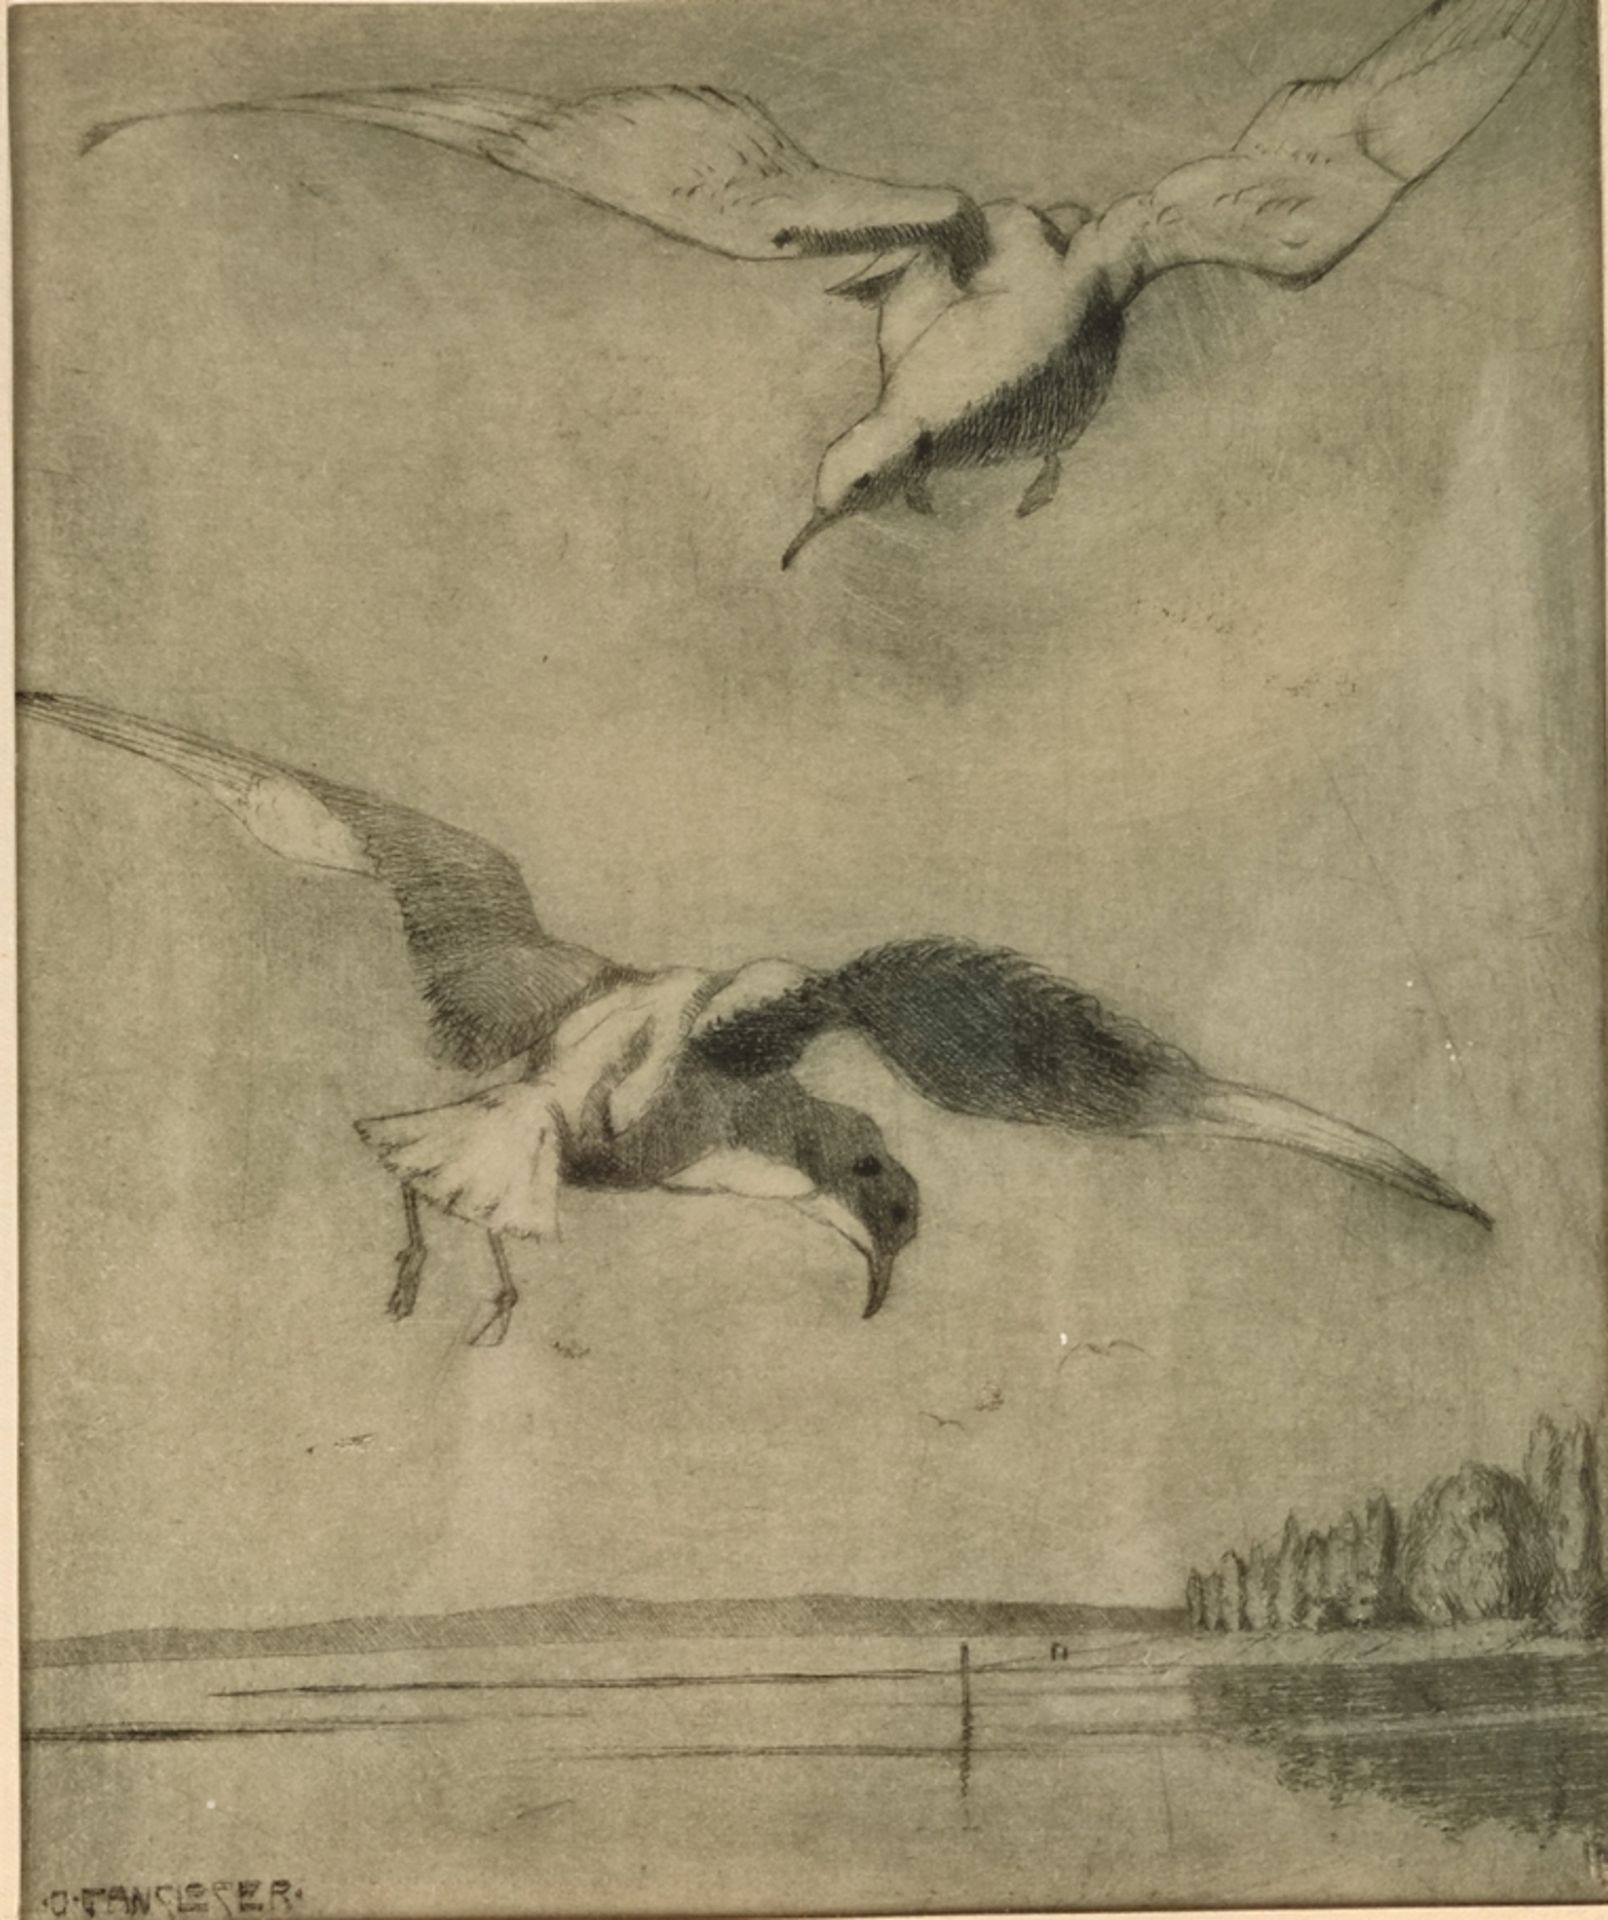 Gansloser, Oskar (1881 Pforzheim -1945 Konstanz) "Möwen im Flug", am Bodensee, links unten in der P